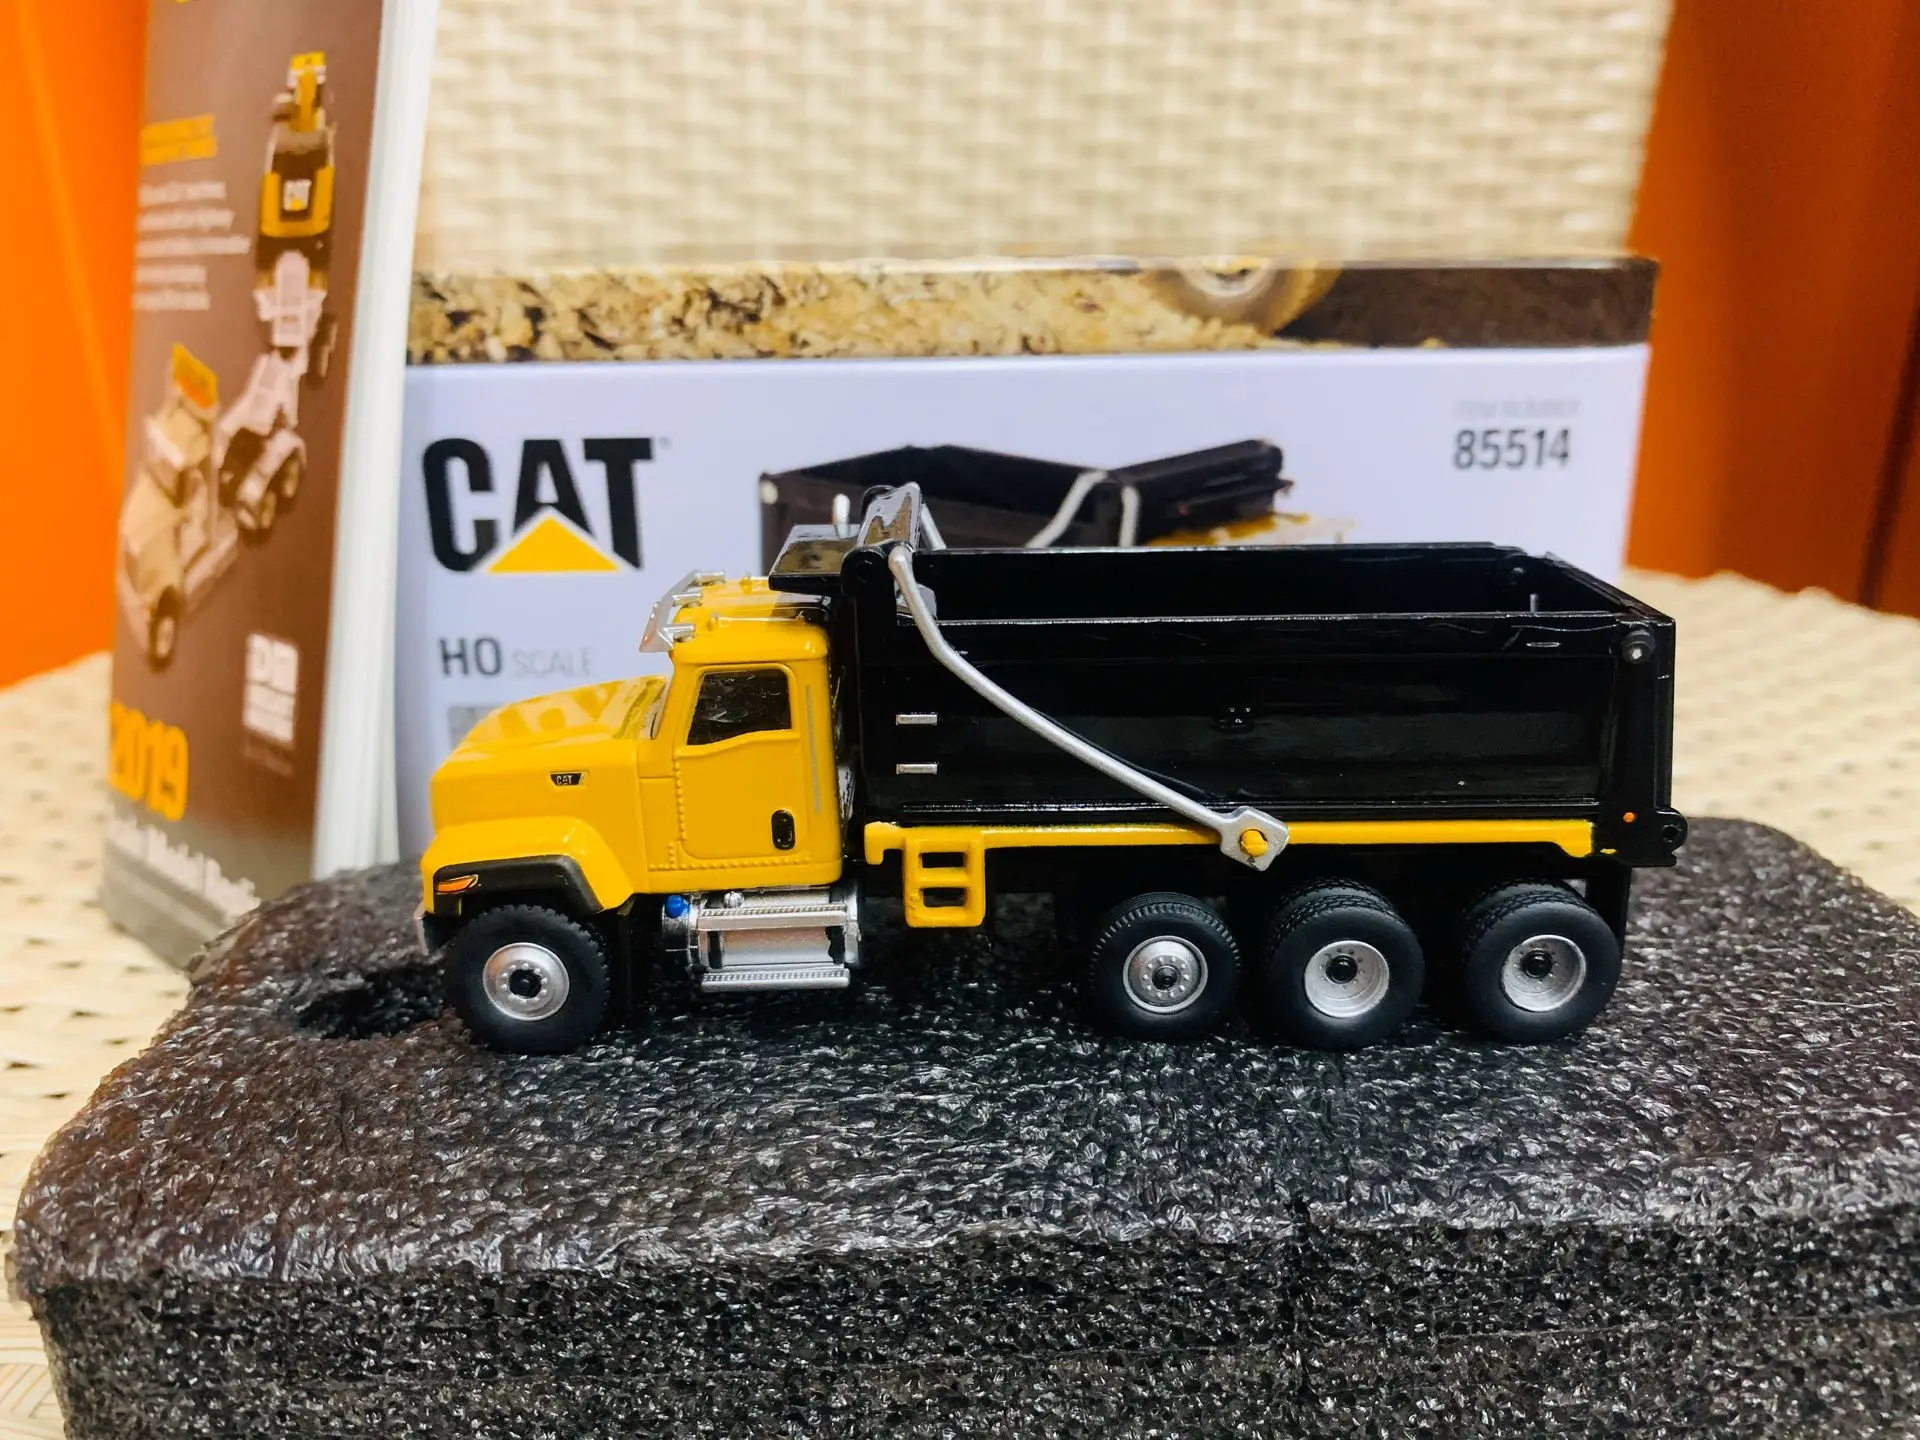 

Caterpillar Cat CT681 Dump Truck 1/87 HO Scale DieCast Metal Model DM85514 New in Box